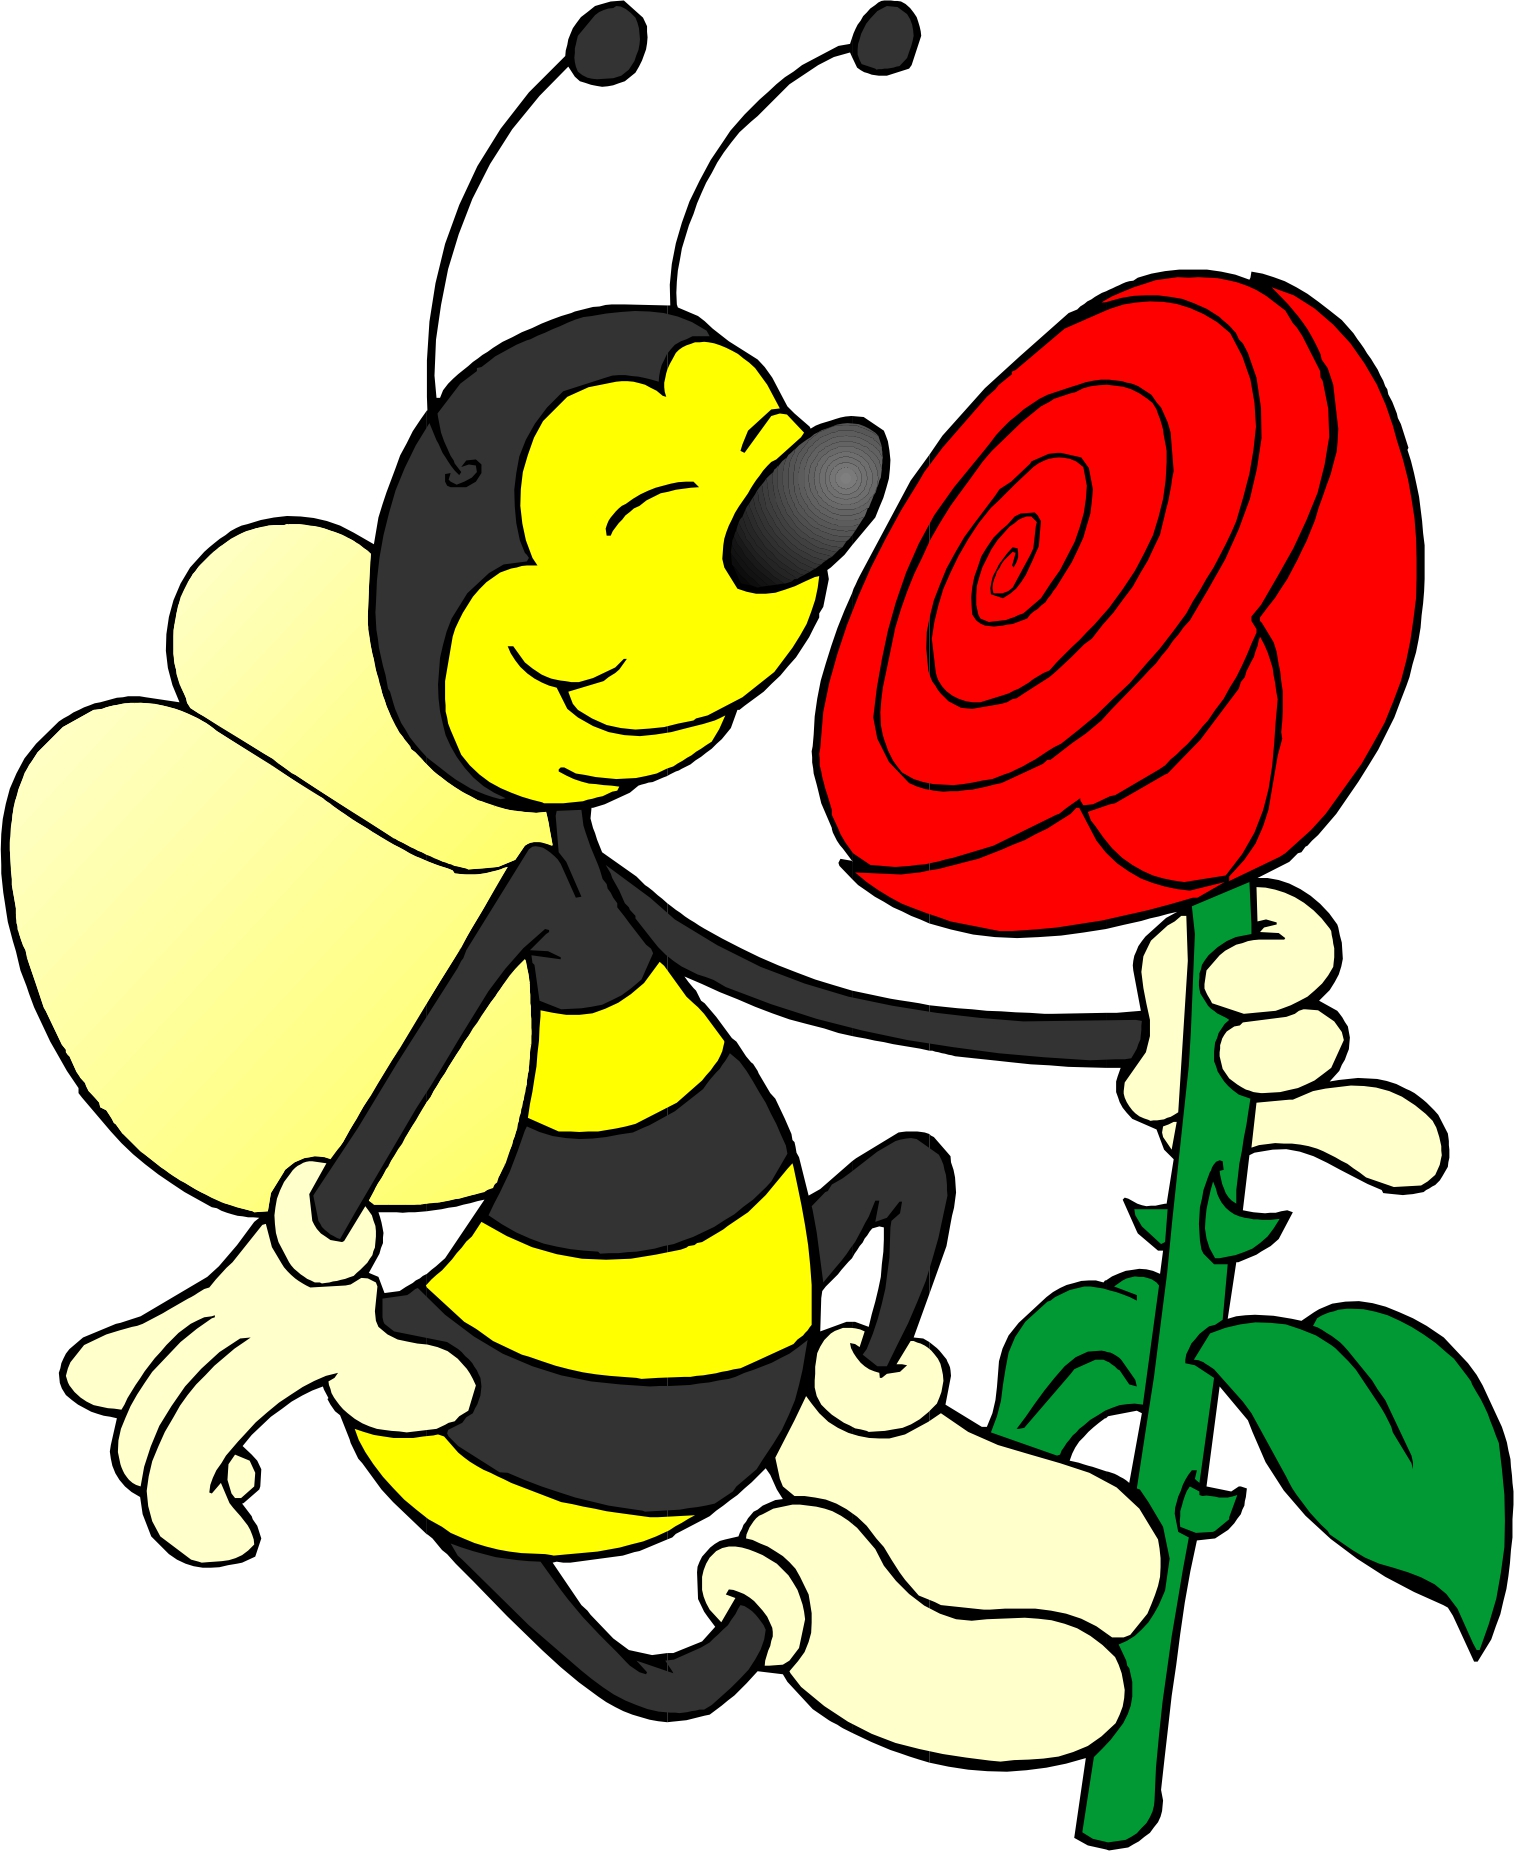 Cartoon Honey Bee